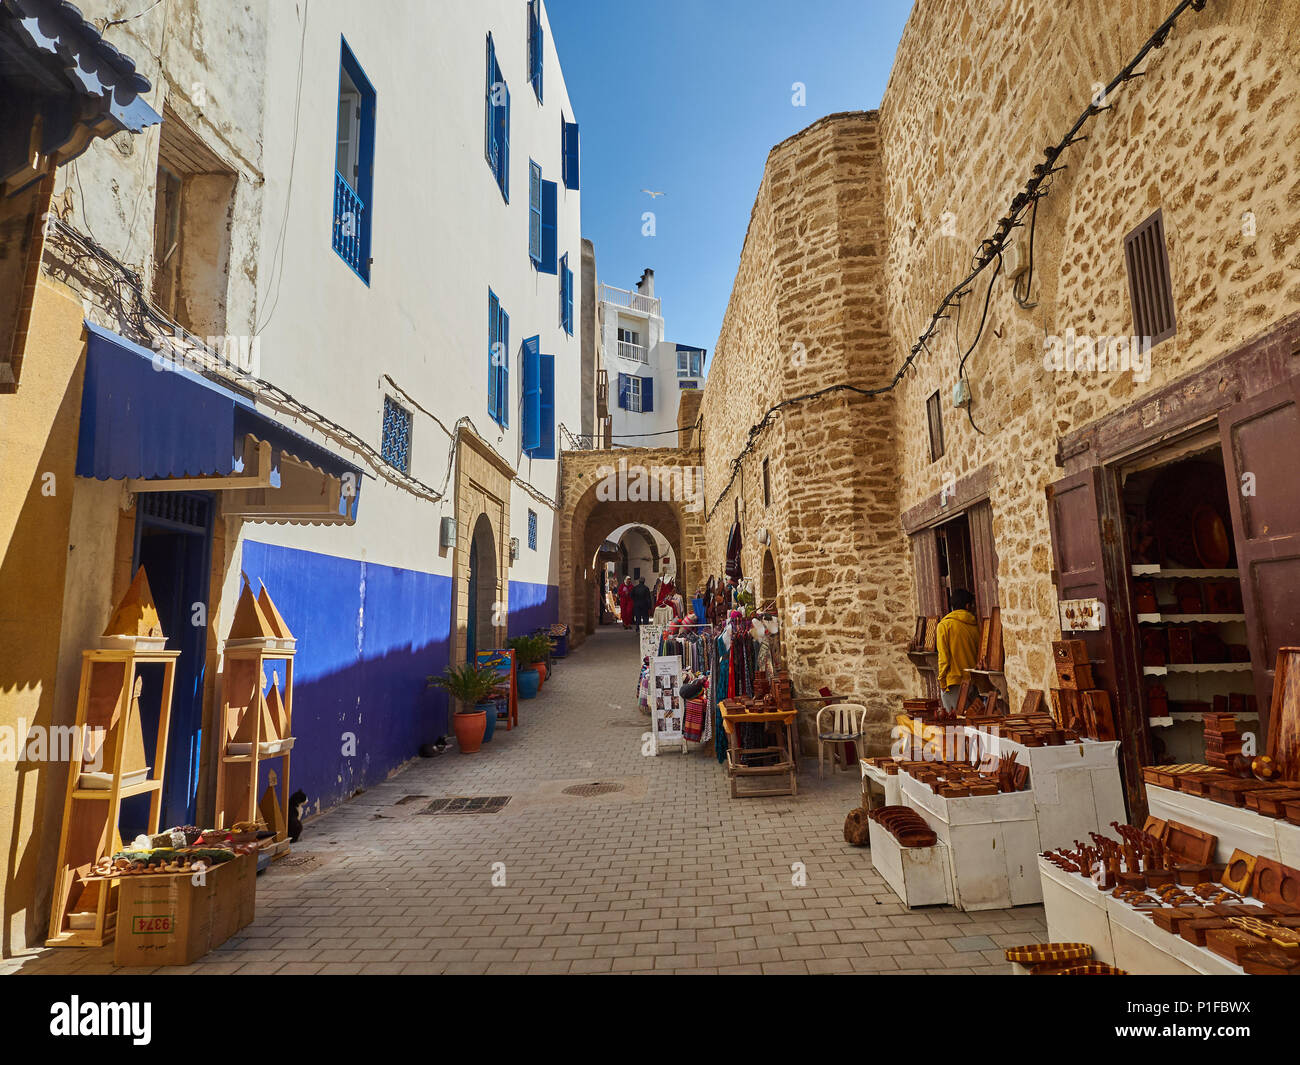 Ancienne médina rue est l'ancienne cité portugaise d'El Jadida, Maroc. Banque D'Images